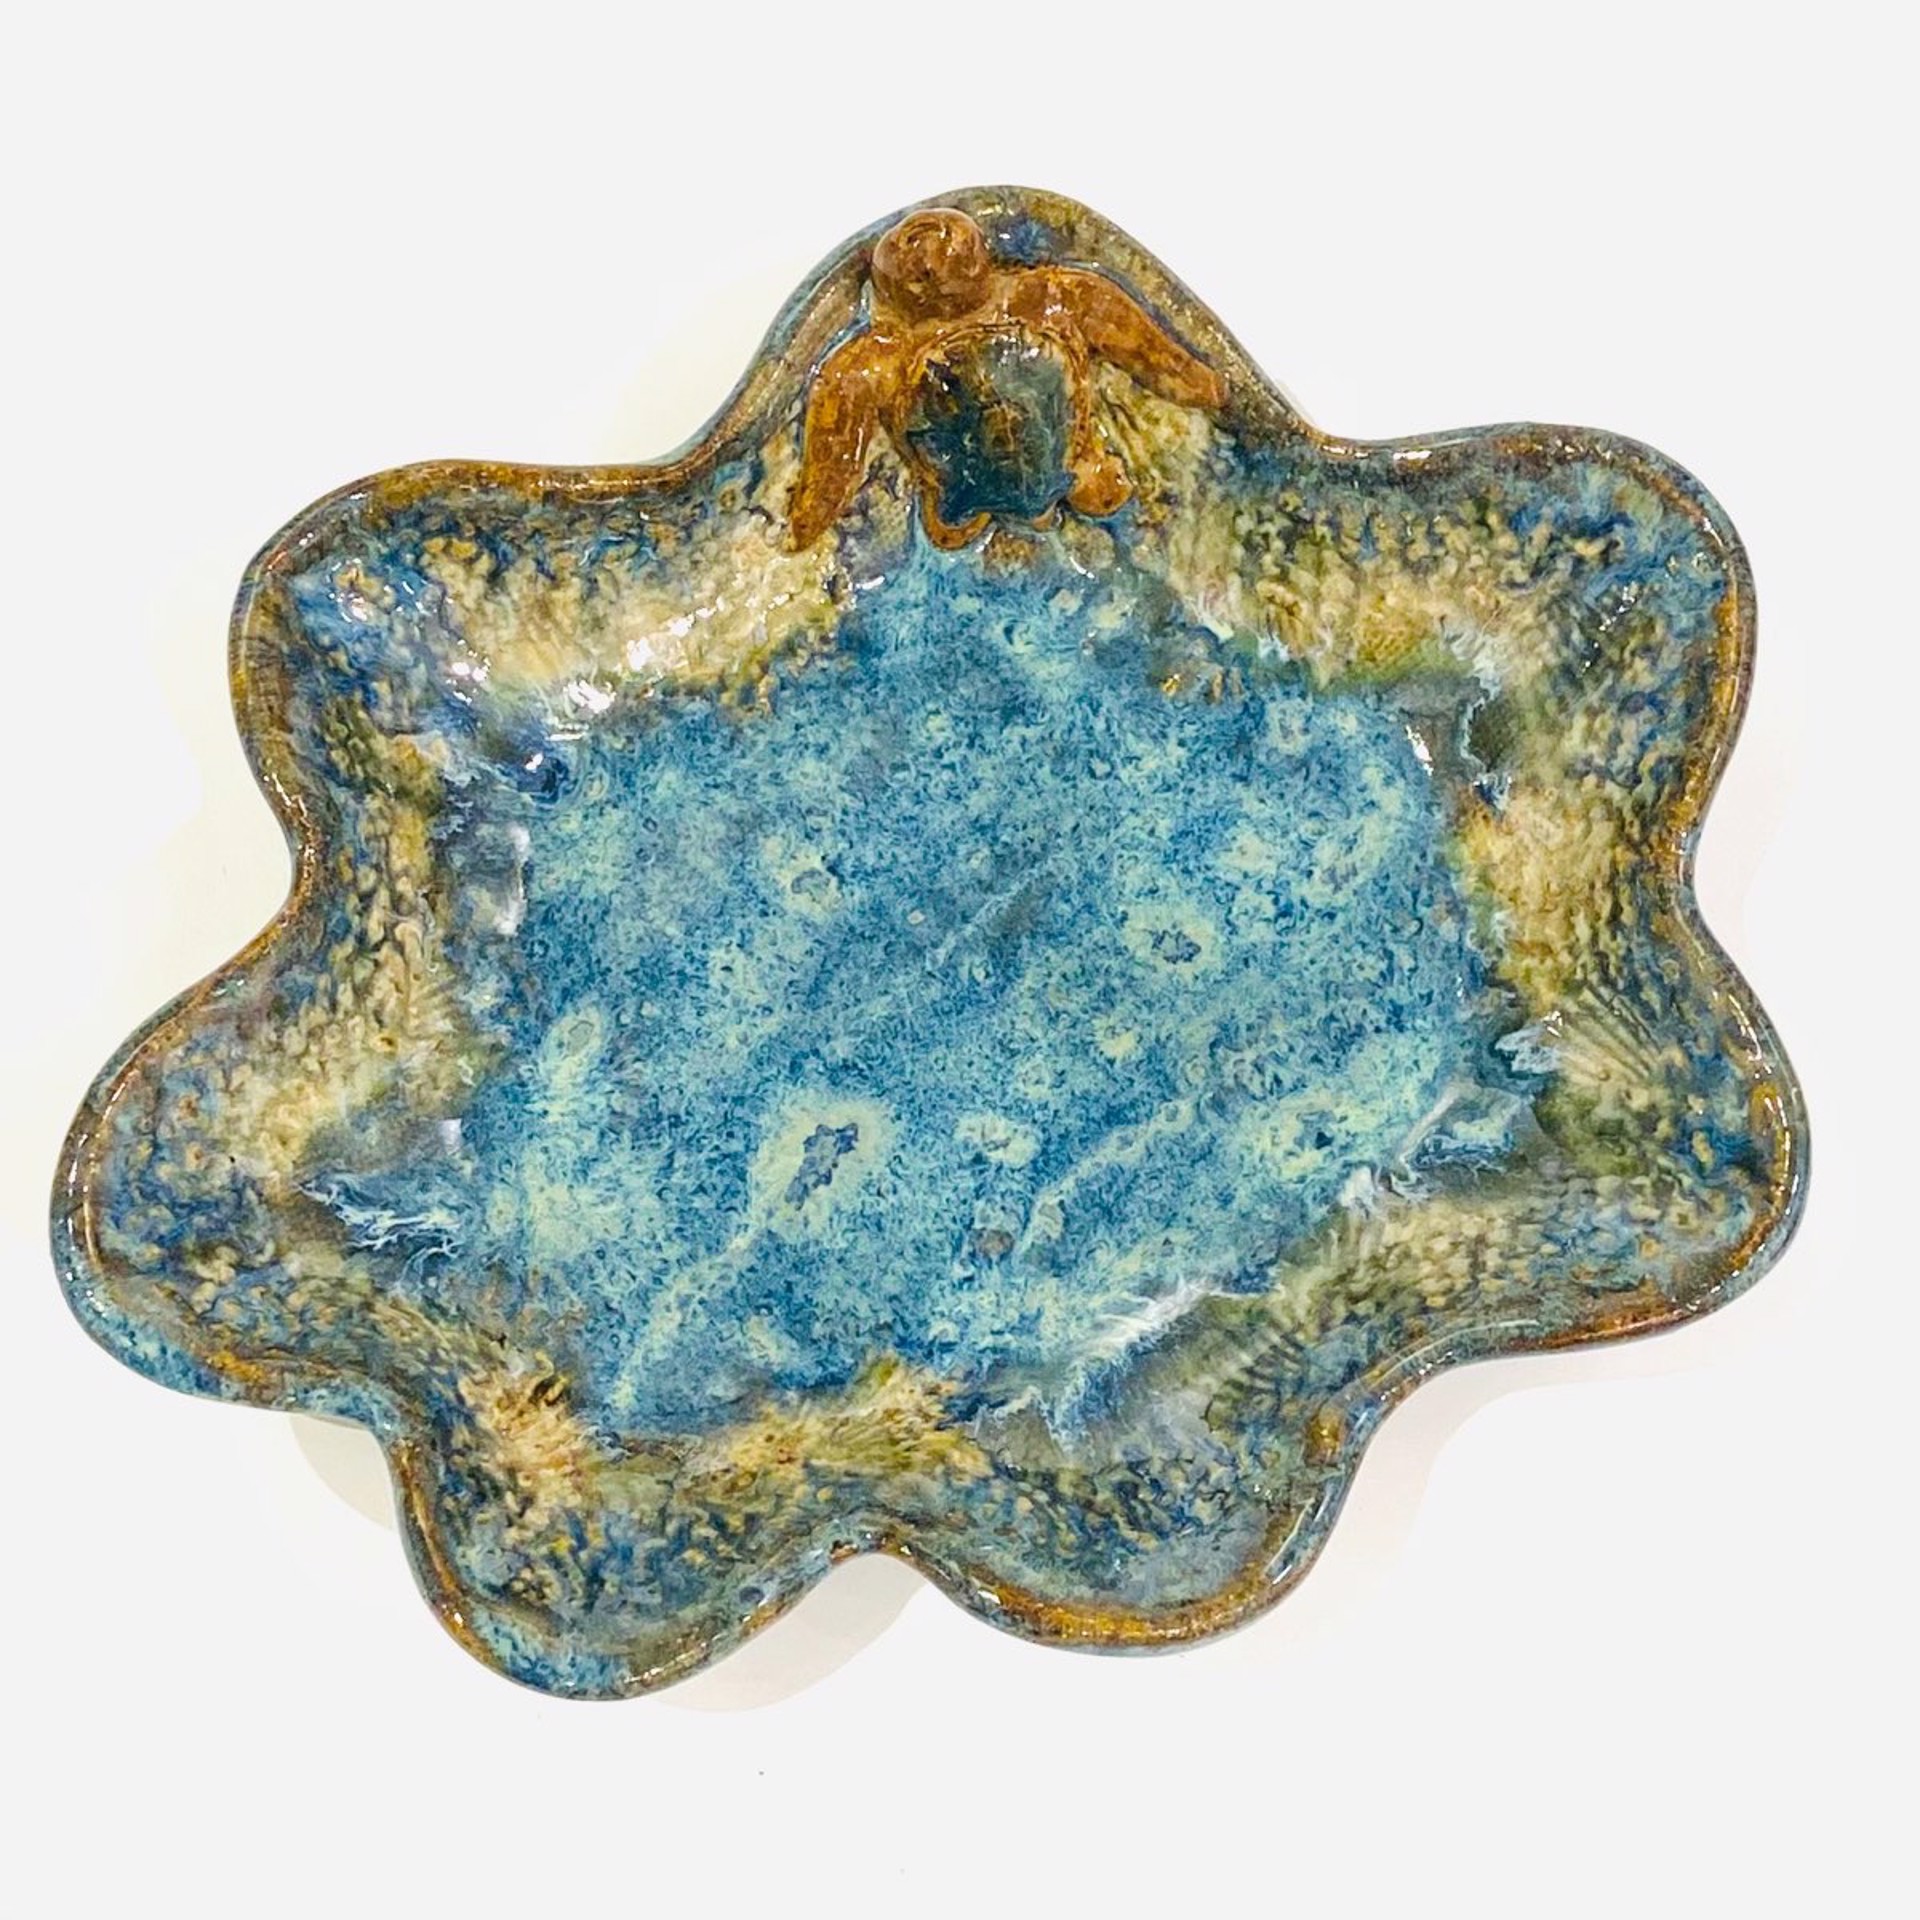 LG22-905 Medium Pool Dish with Turtle (Blue Glaze) by Jim & Steffi Logan